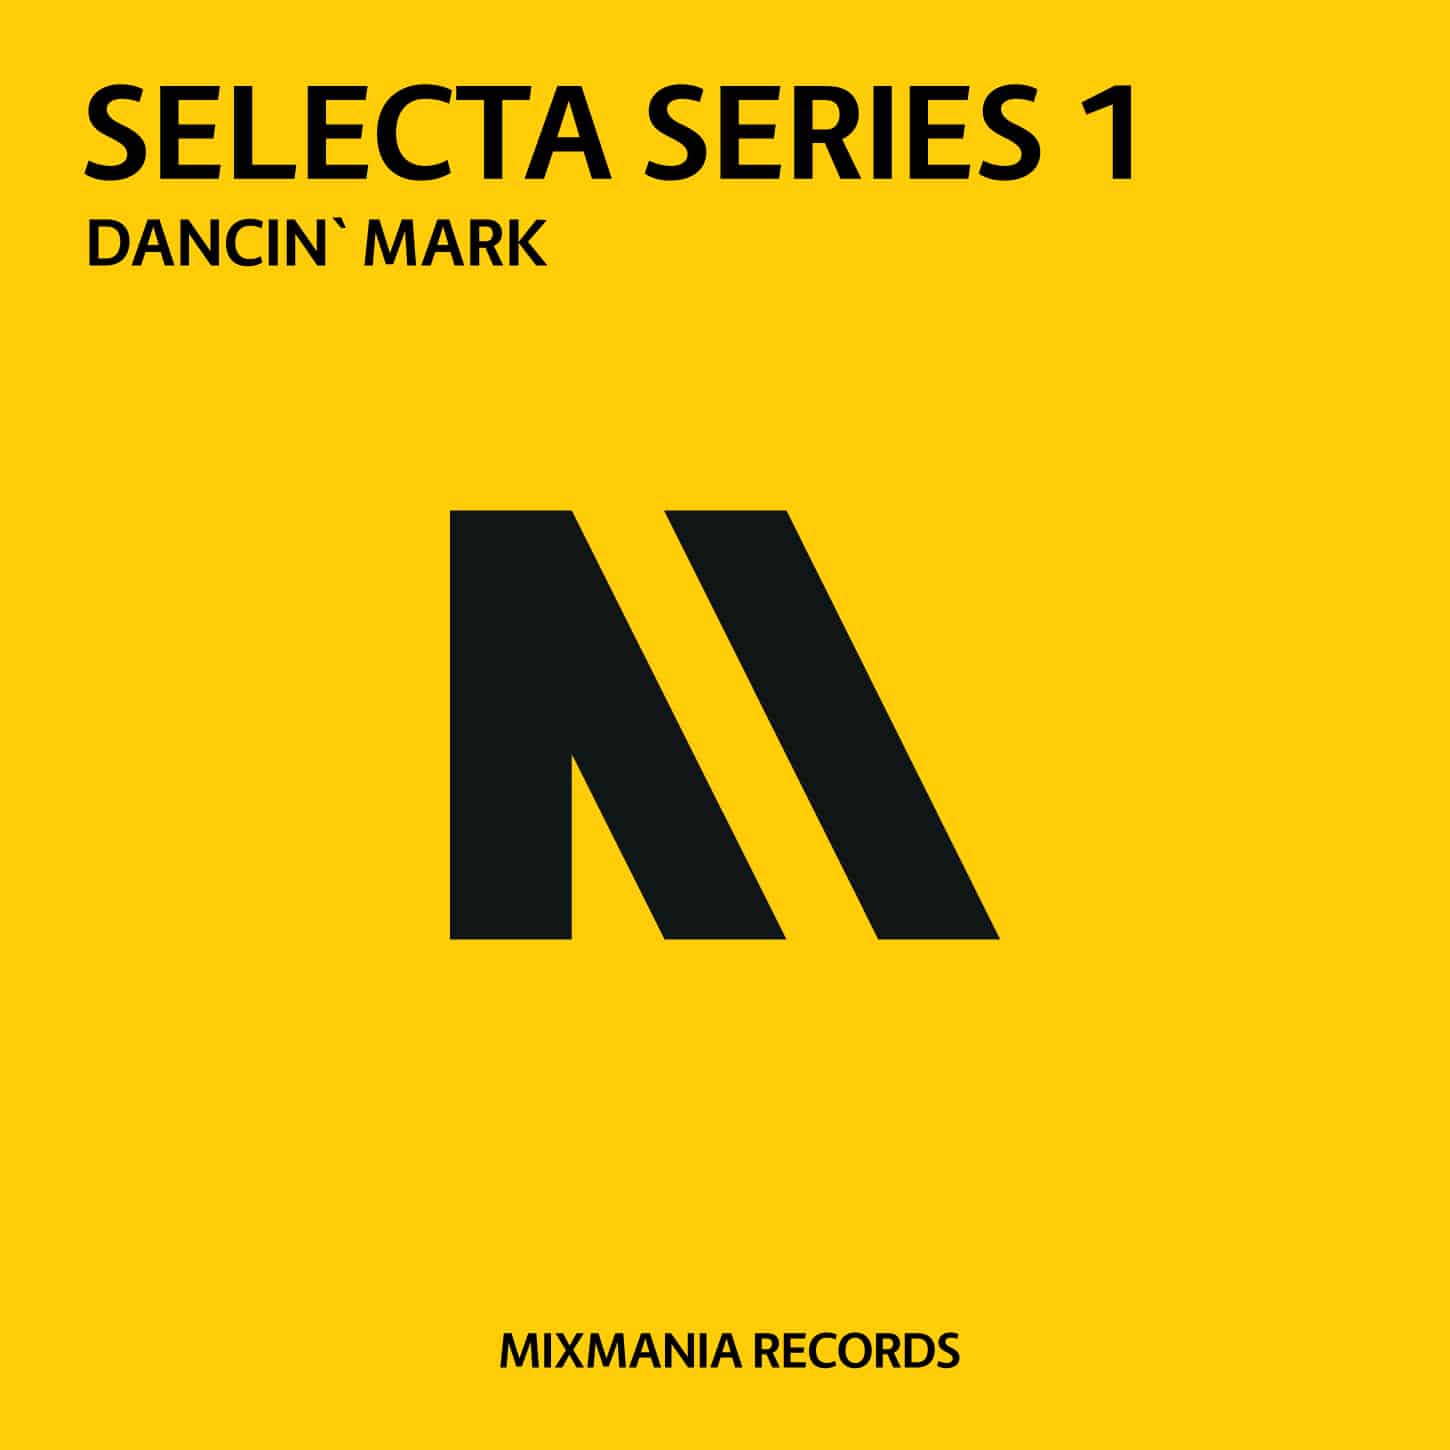 Dancin Mark Mixmania Records Selecta series